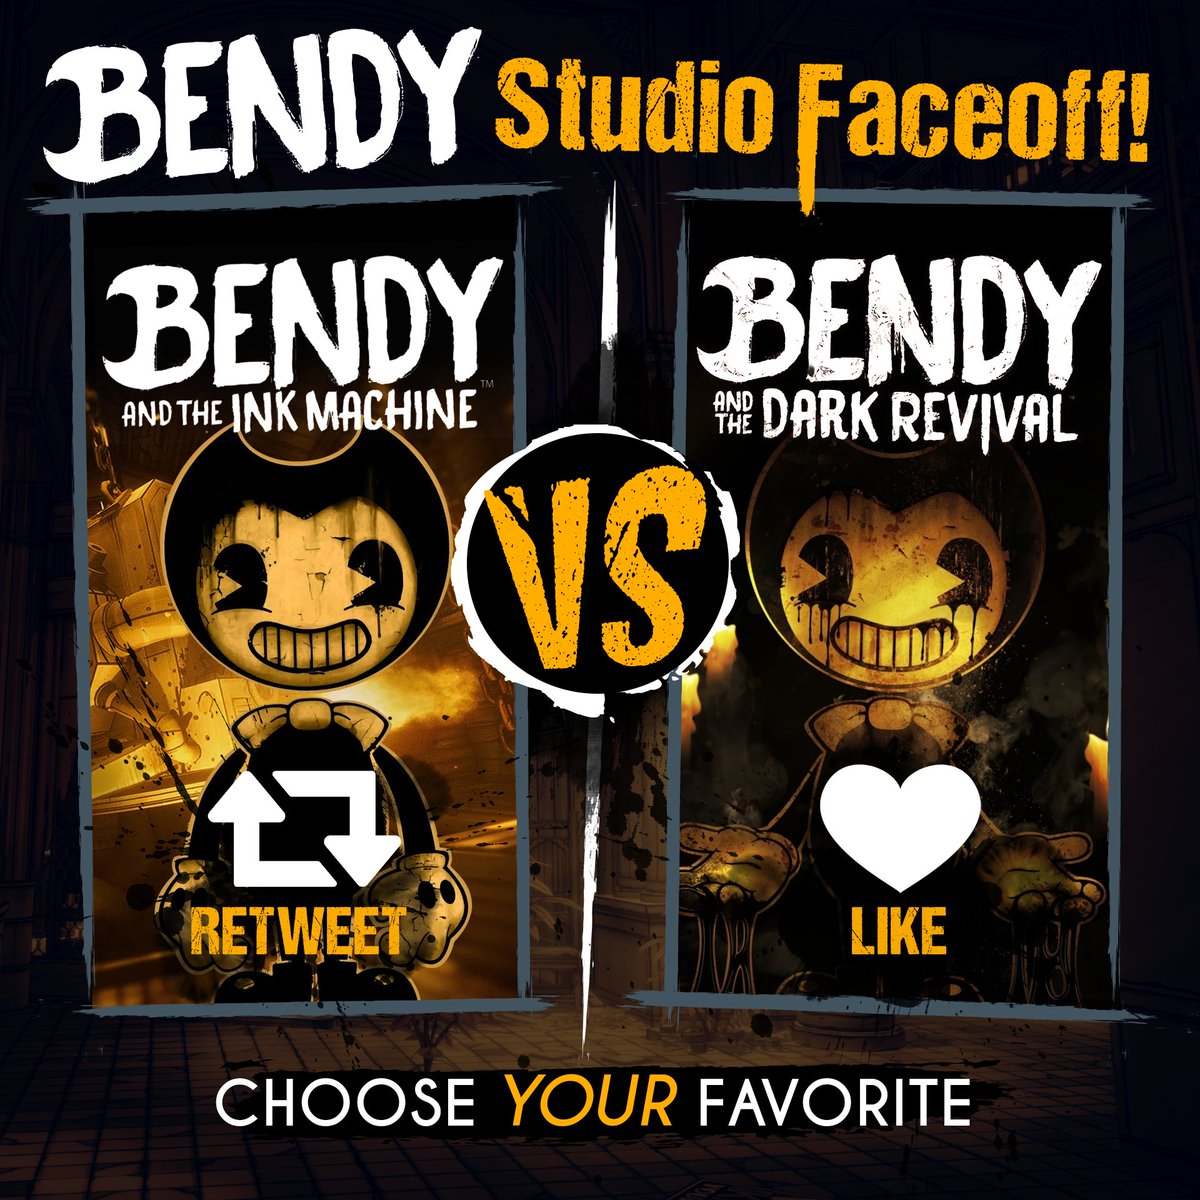 It's GAME vs GAME in... Studio Faceoff!
You must choose ONE!!

#BATDR #BENDY #BATIM